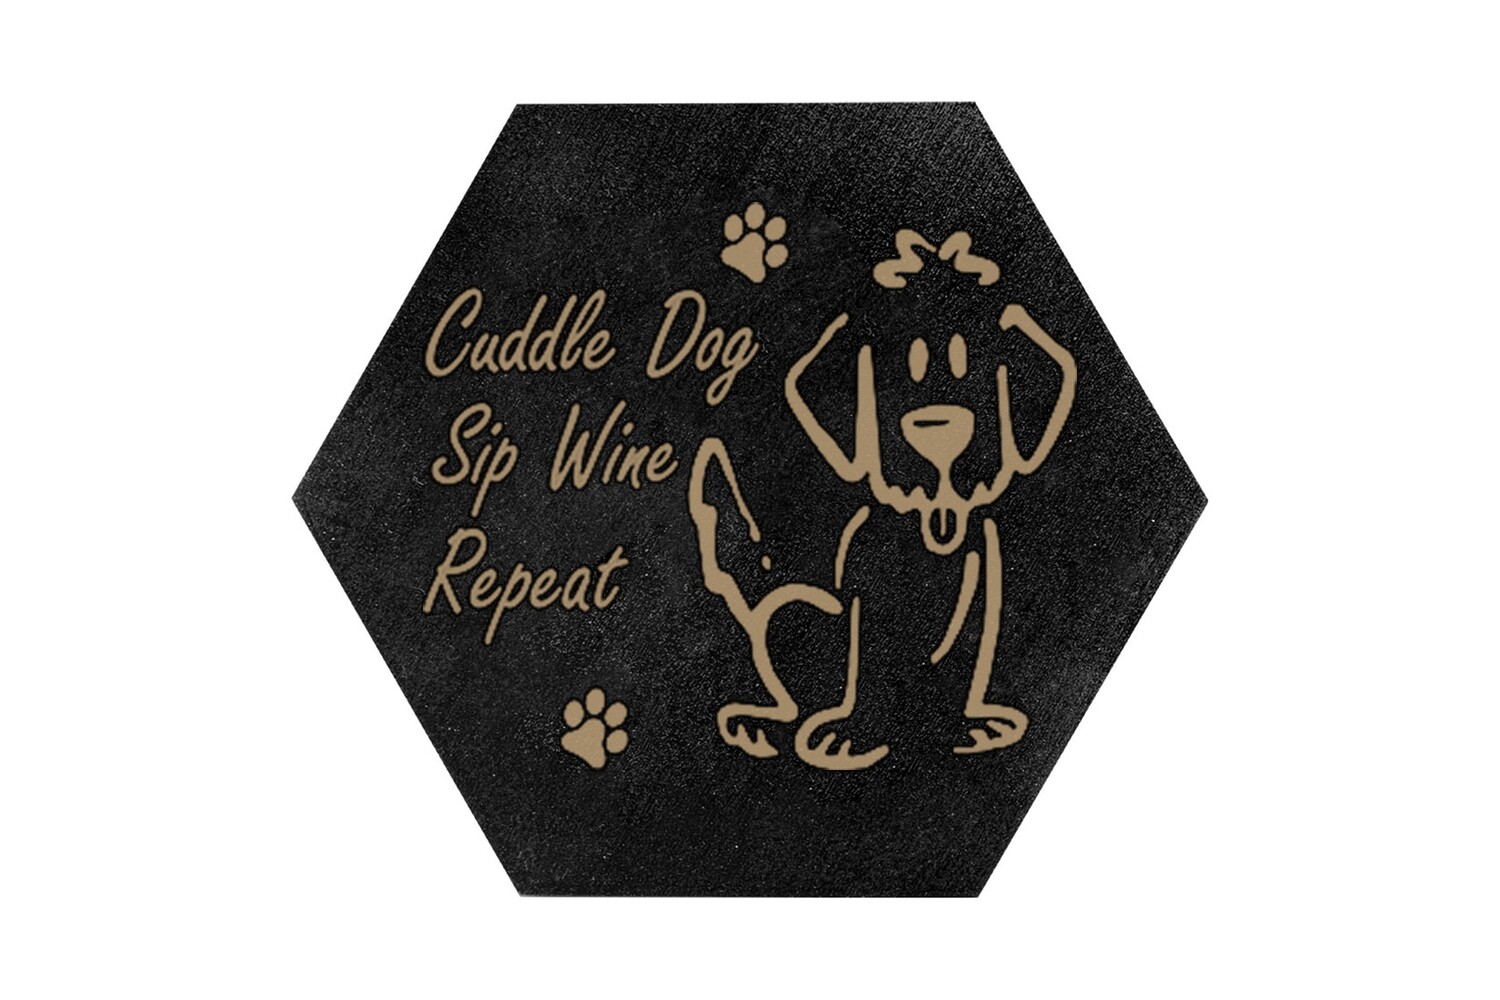 Cuddle Dog, Sip Wine, Repeat on HEX Hand-Painted Wood Coaster Set